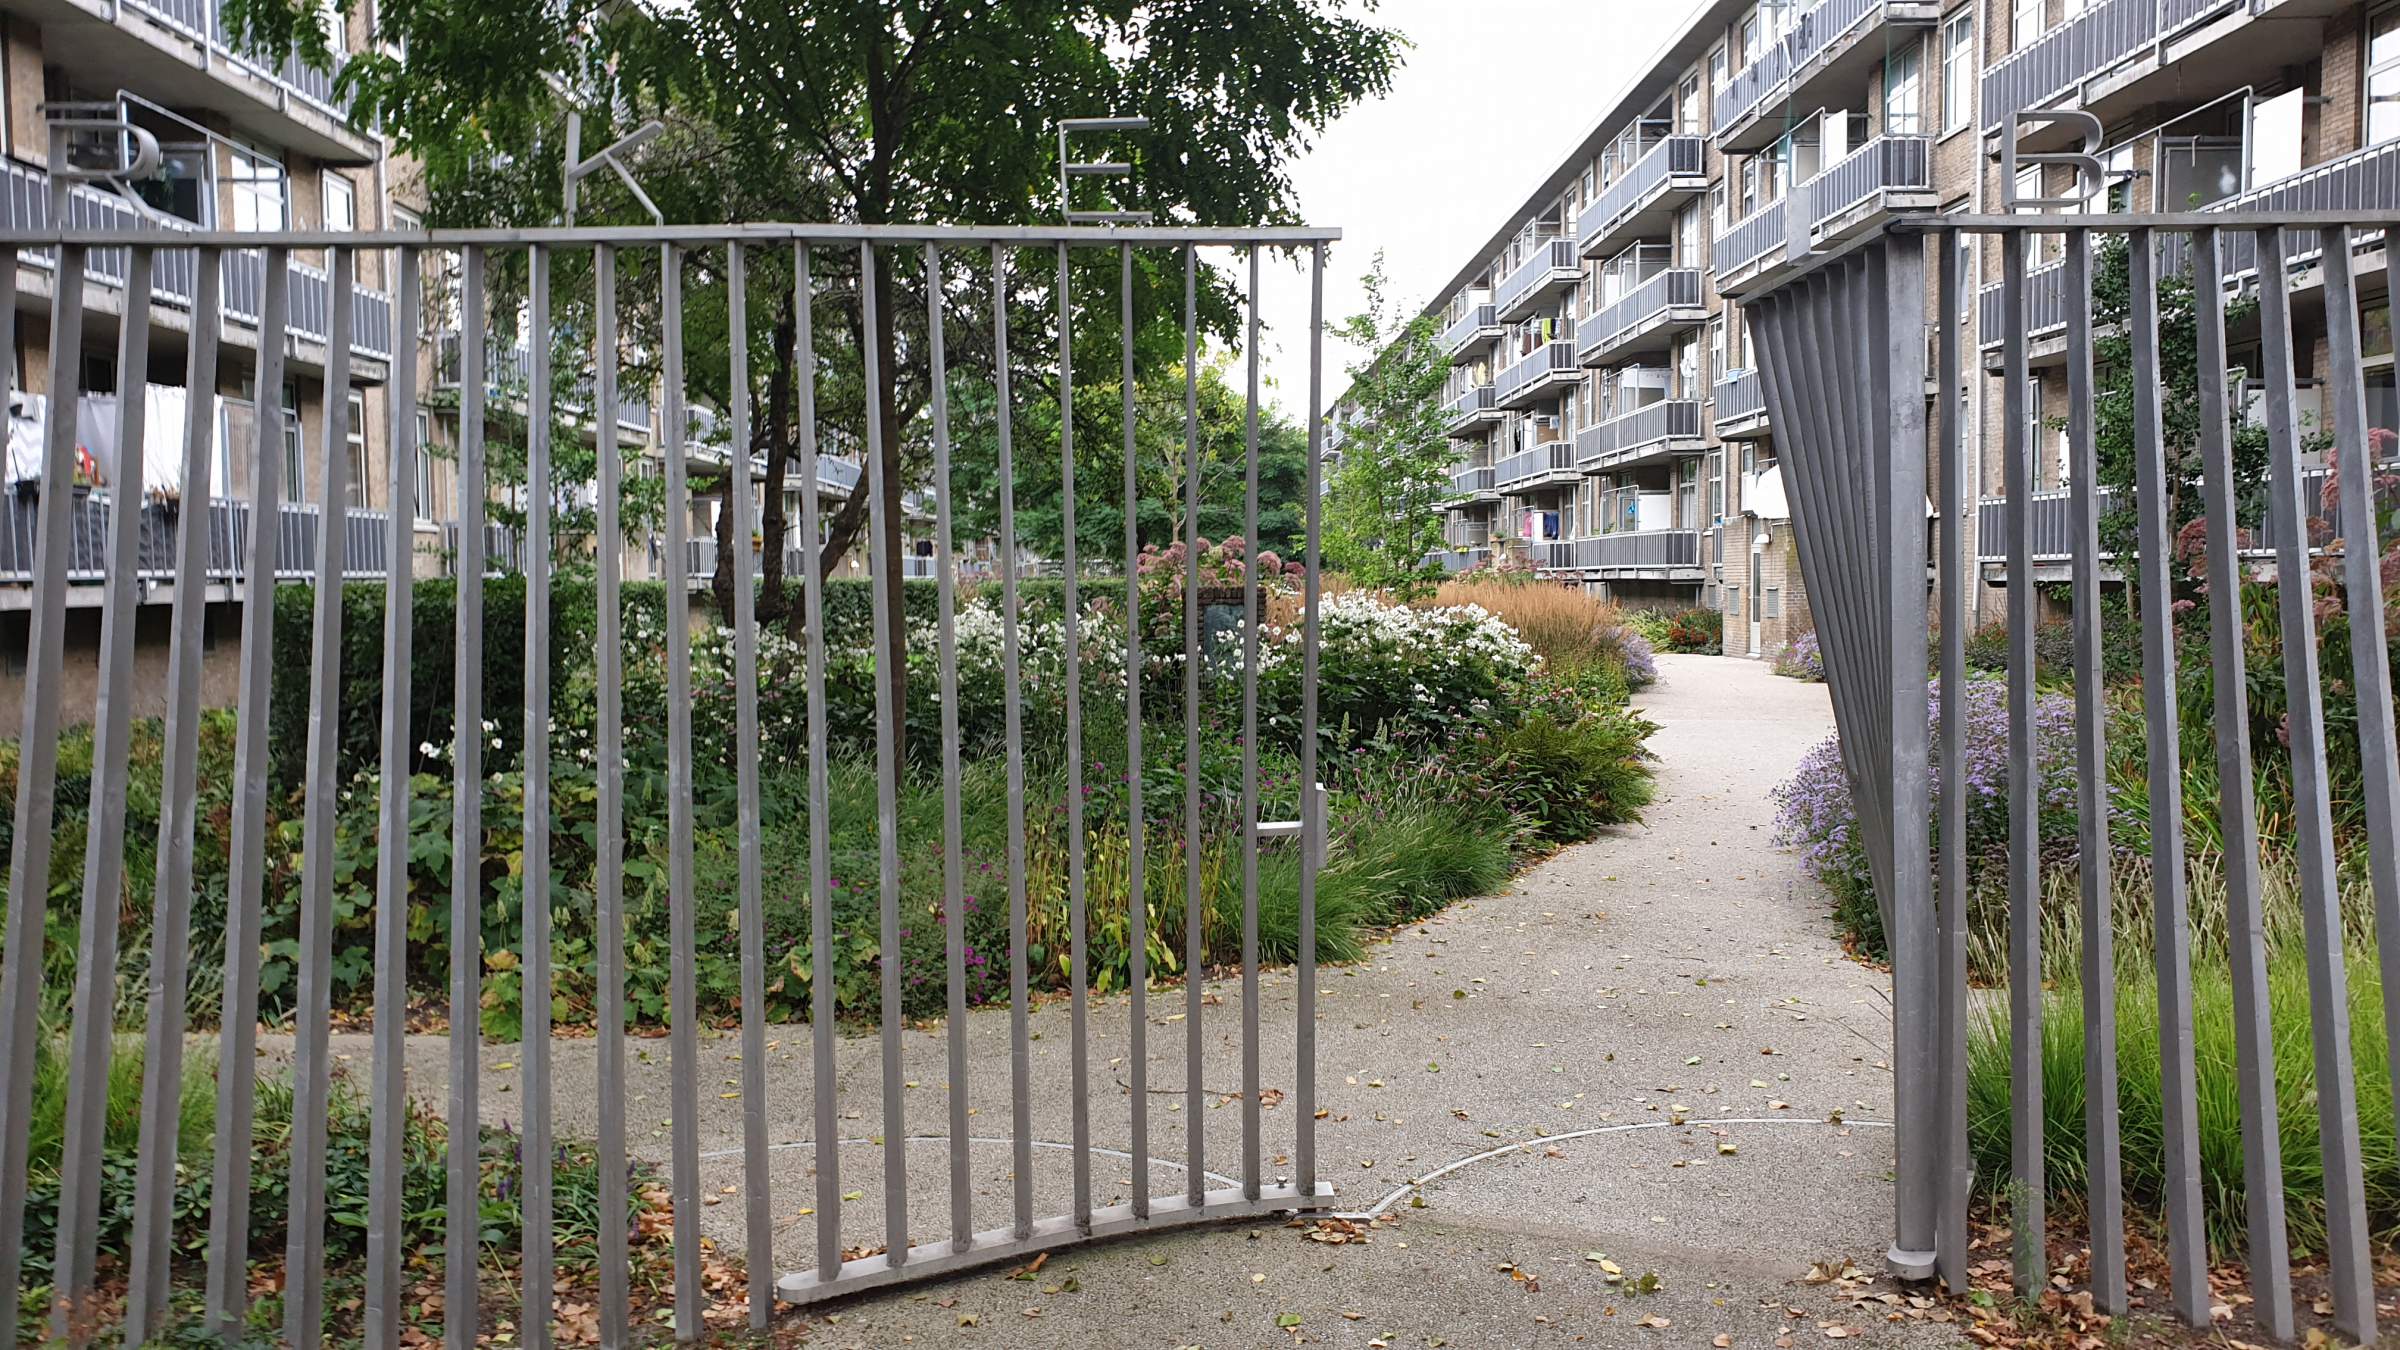 Merkelbach - fence